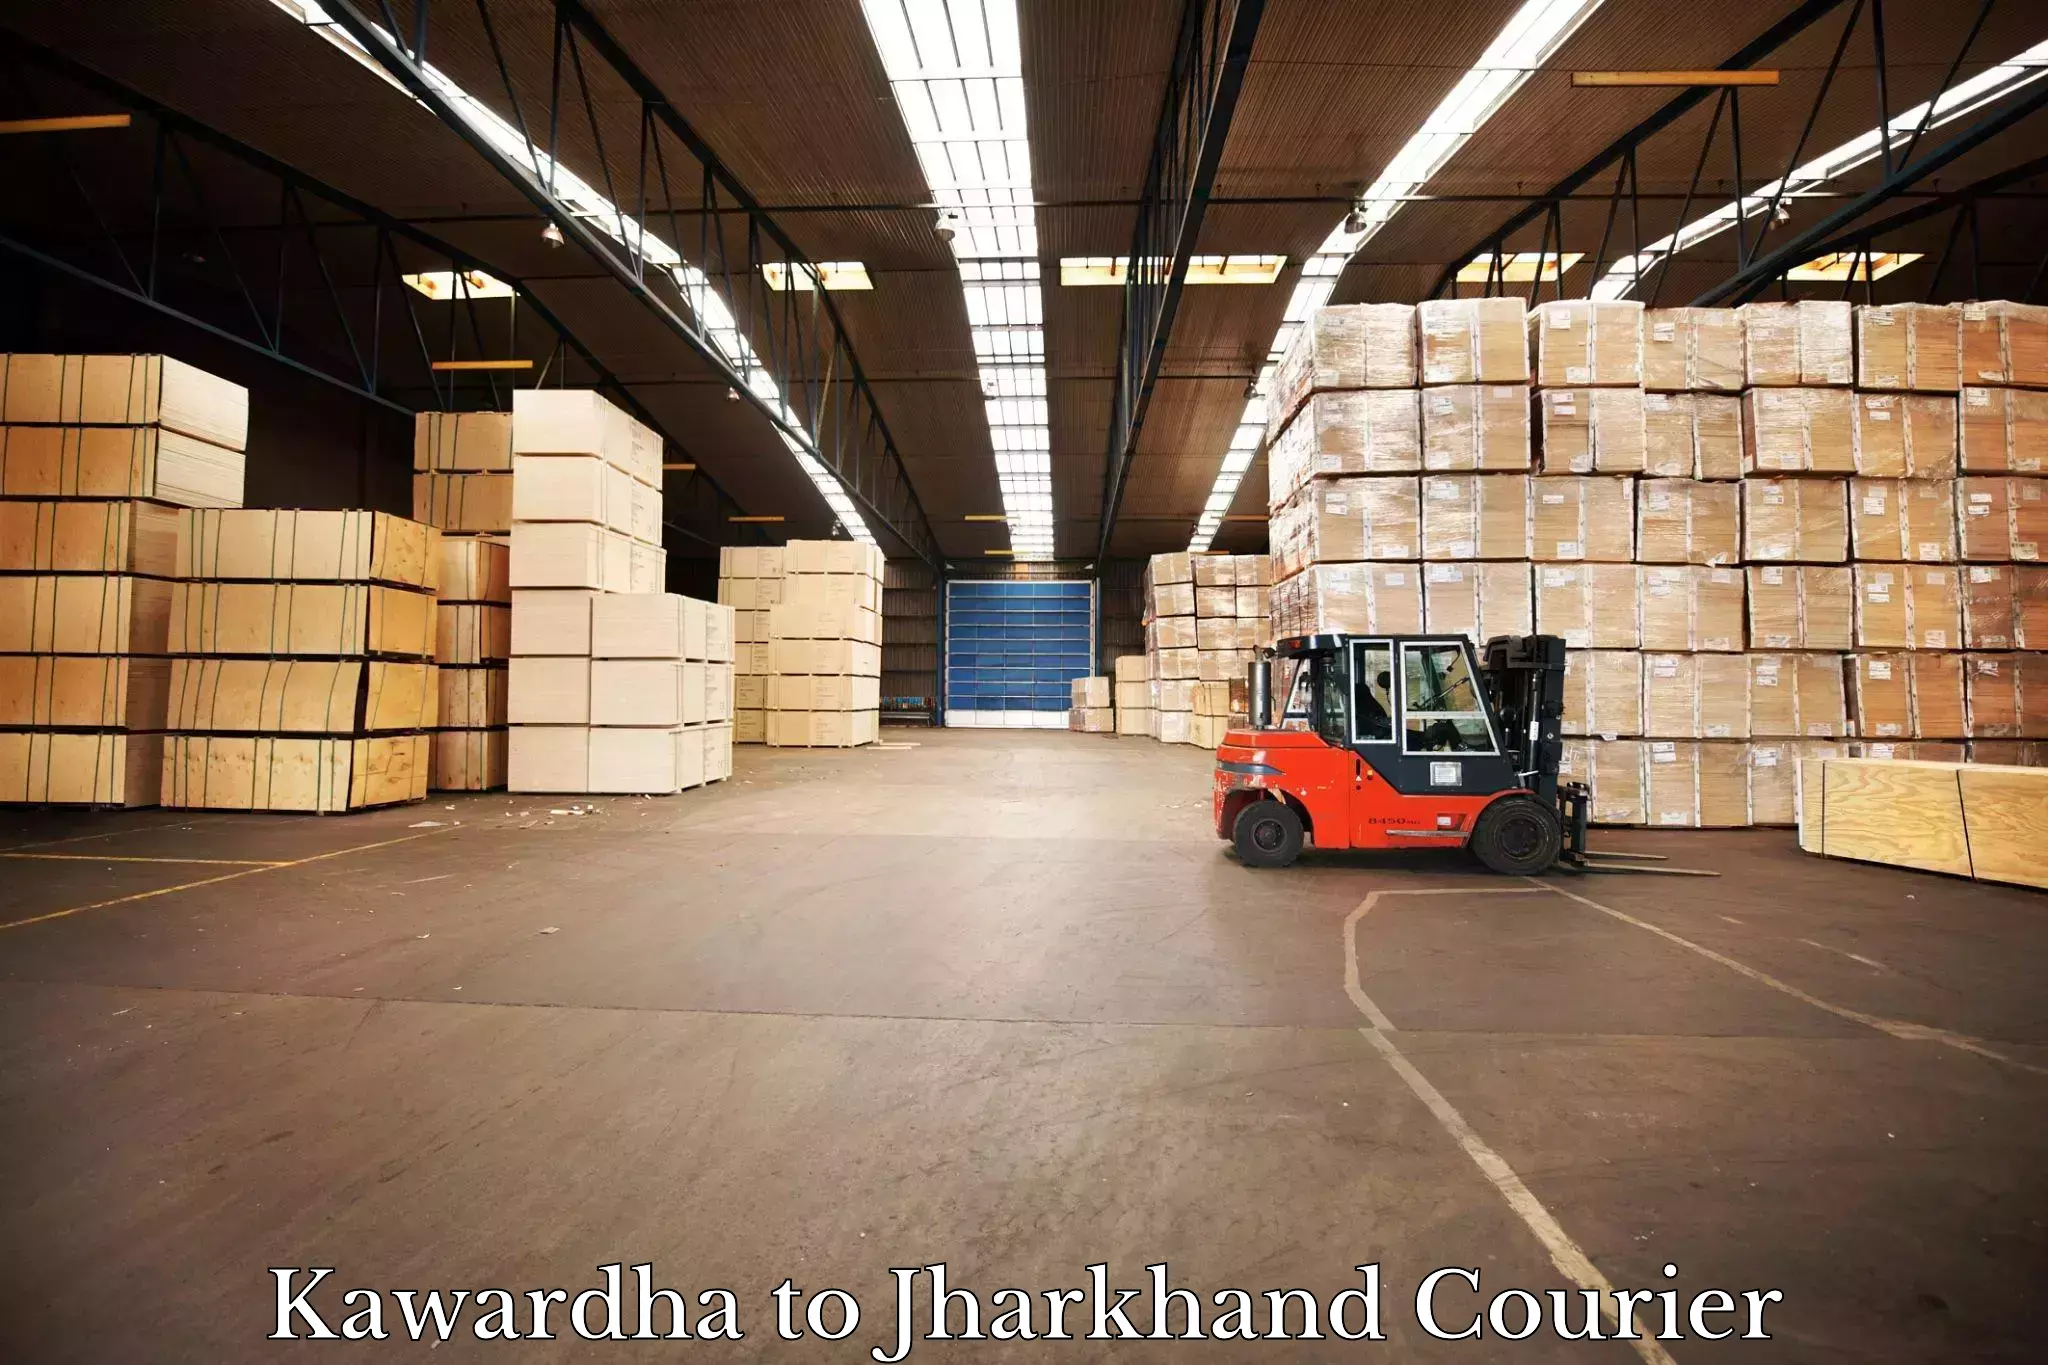 Express delivery capabilities Kawardha to Chandankiyari